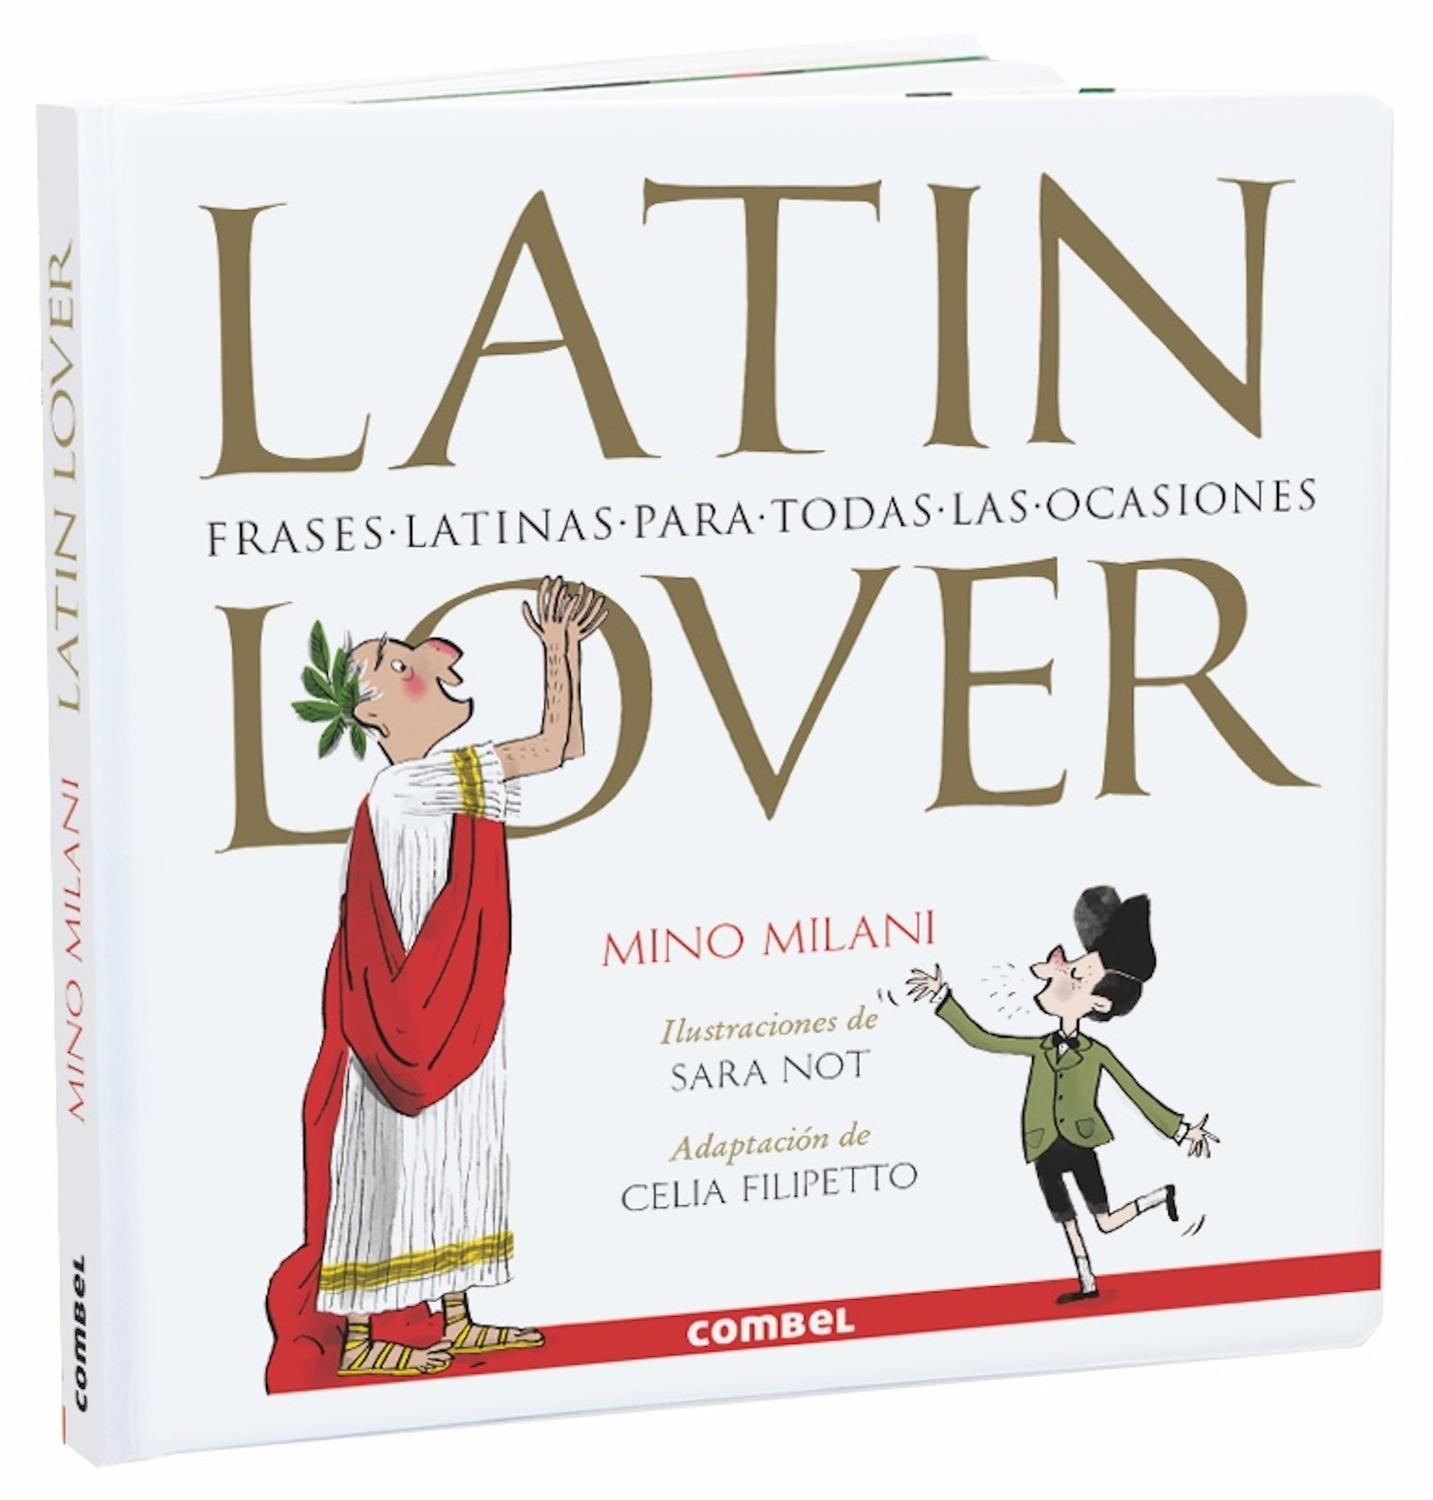 Latin Lover. 